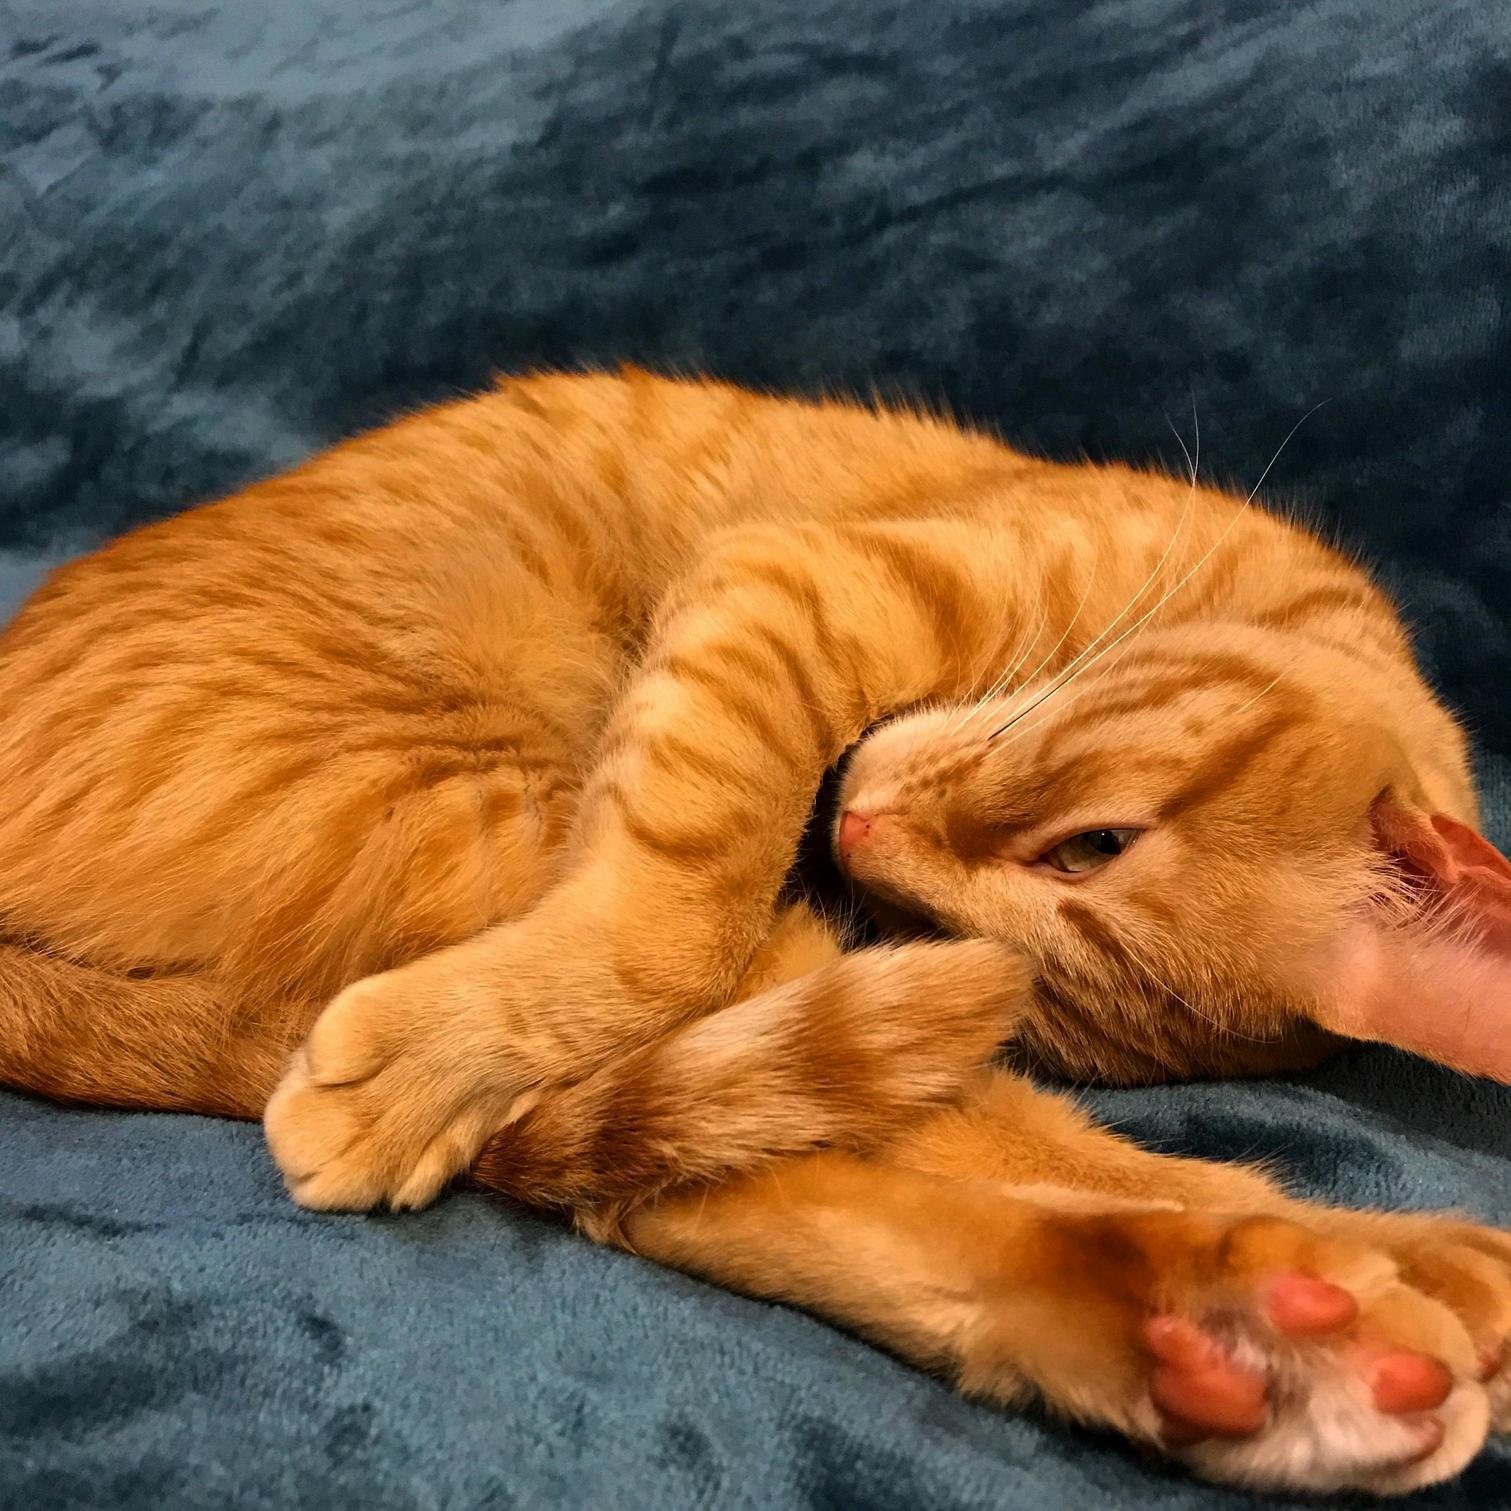 Sleepy kitty (bonus toe beans)